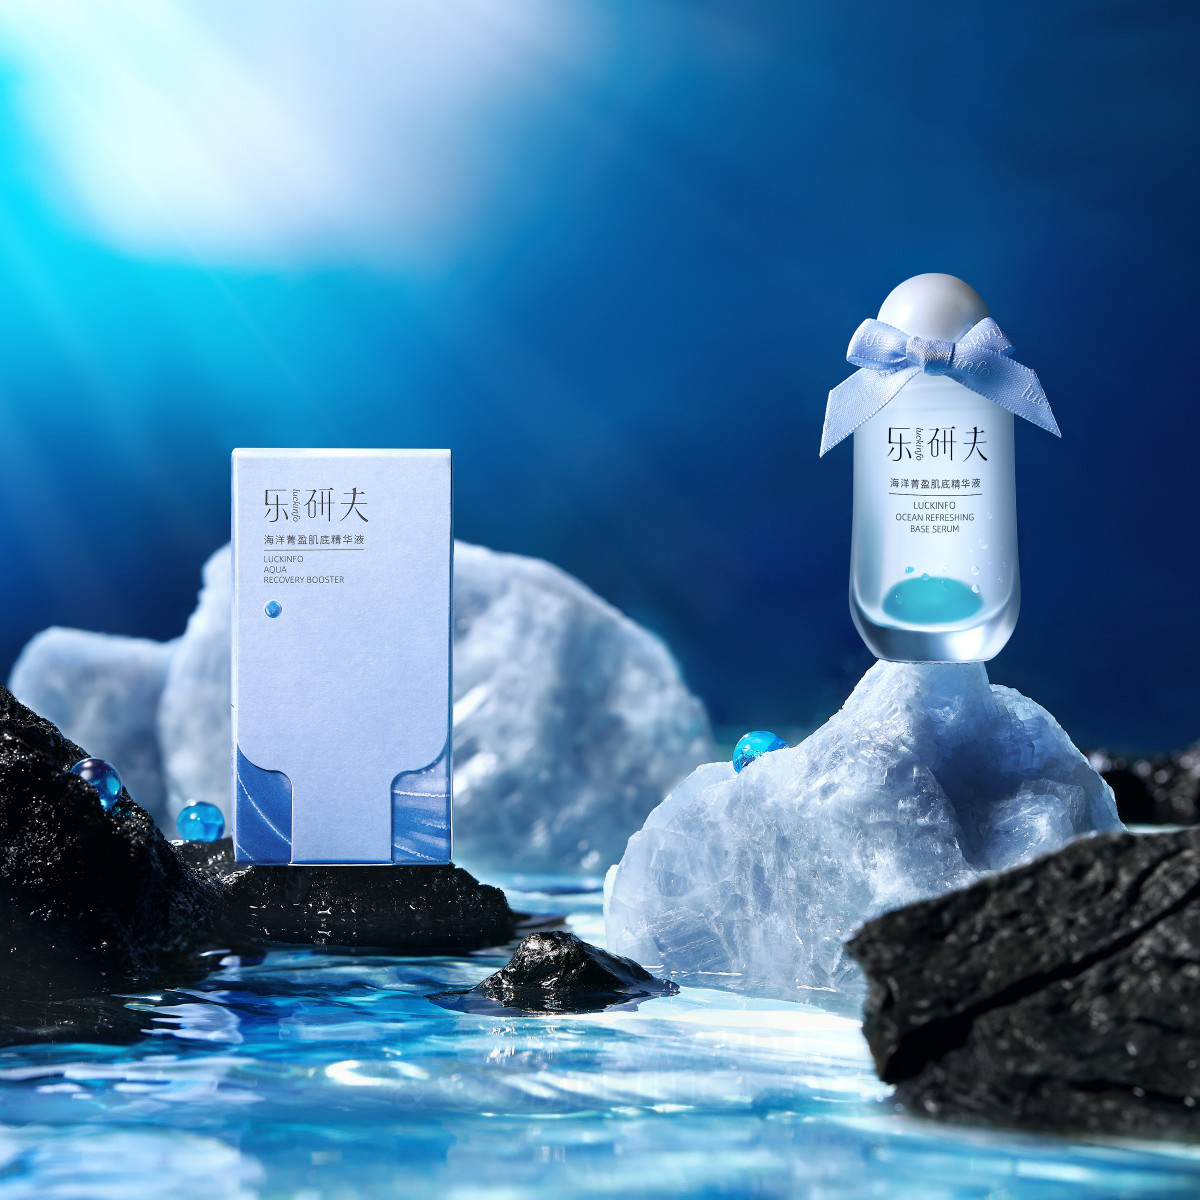 Luckinfo Ocean Refreshing Base Serum Packaging by Wai Ho Cheung